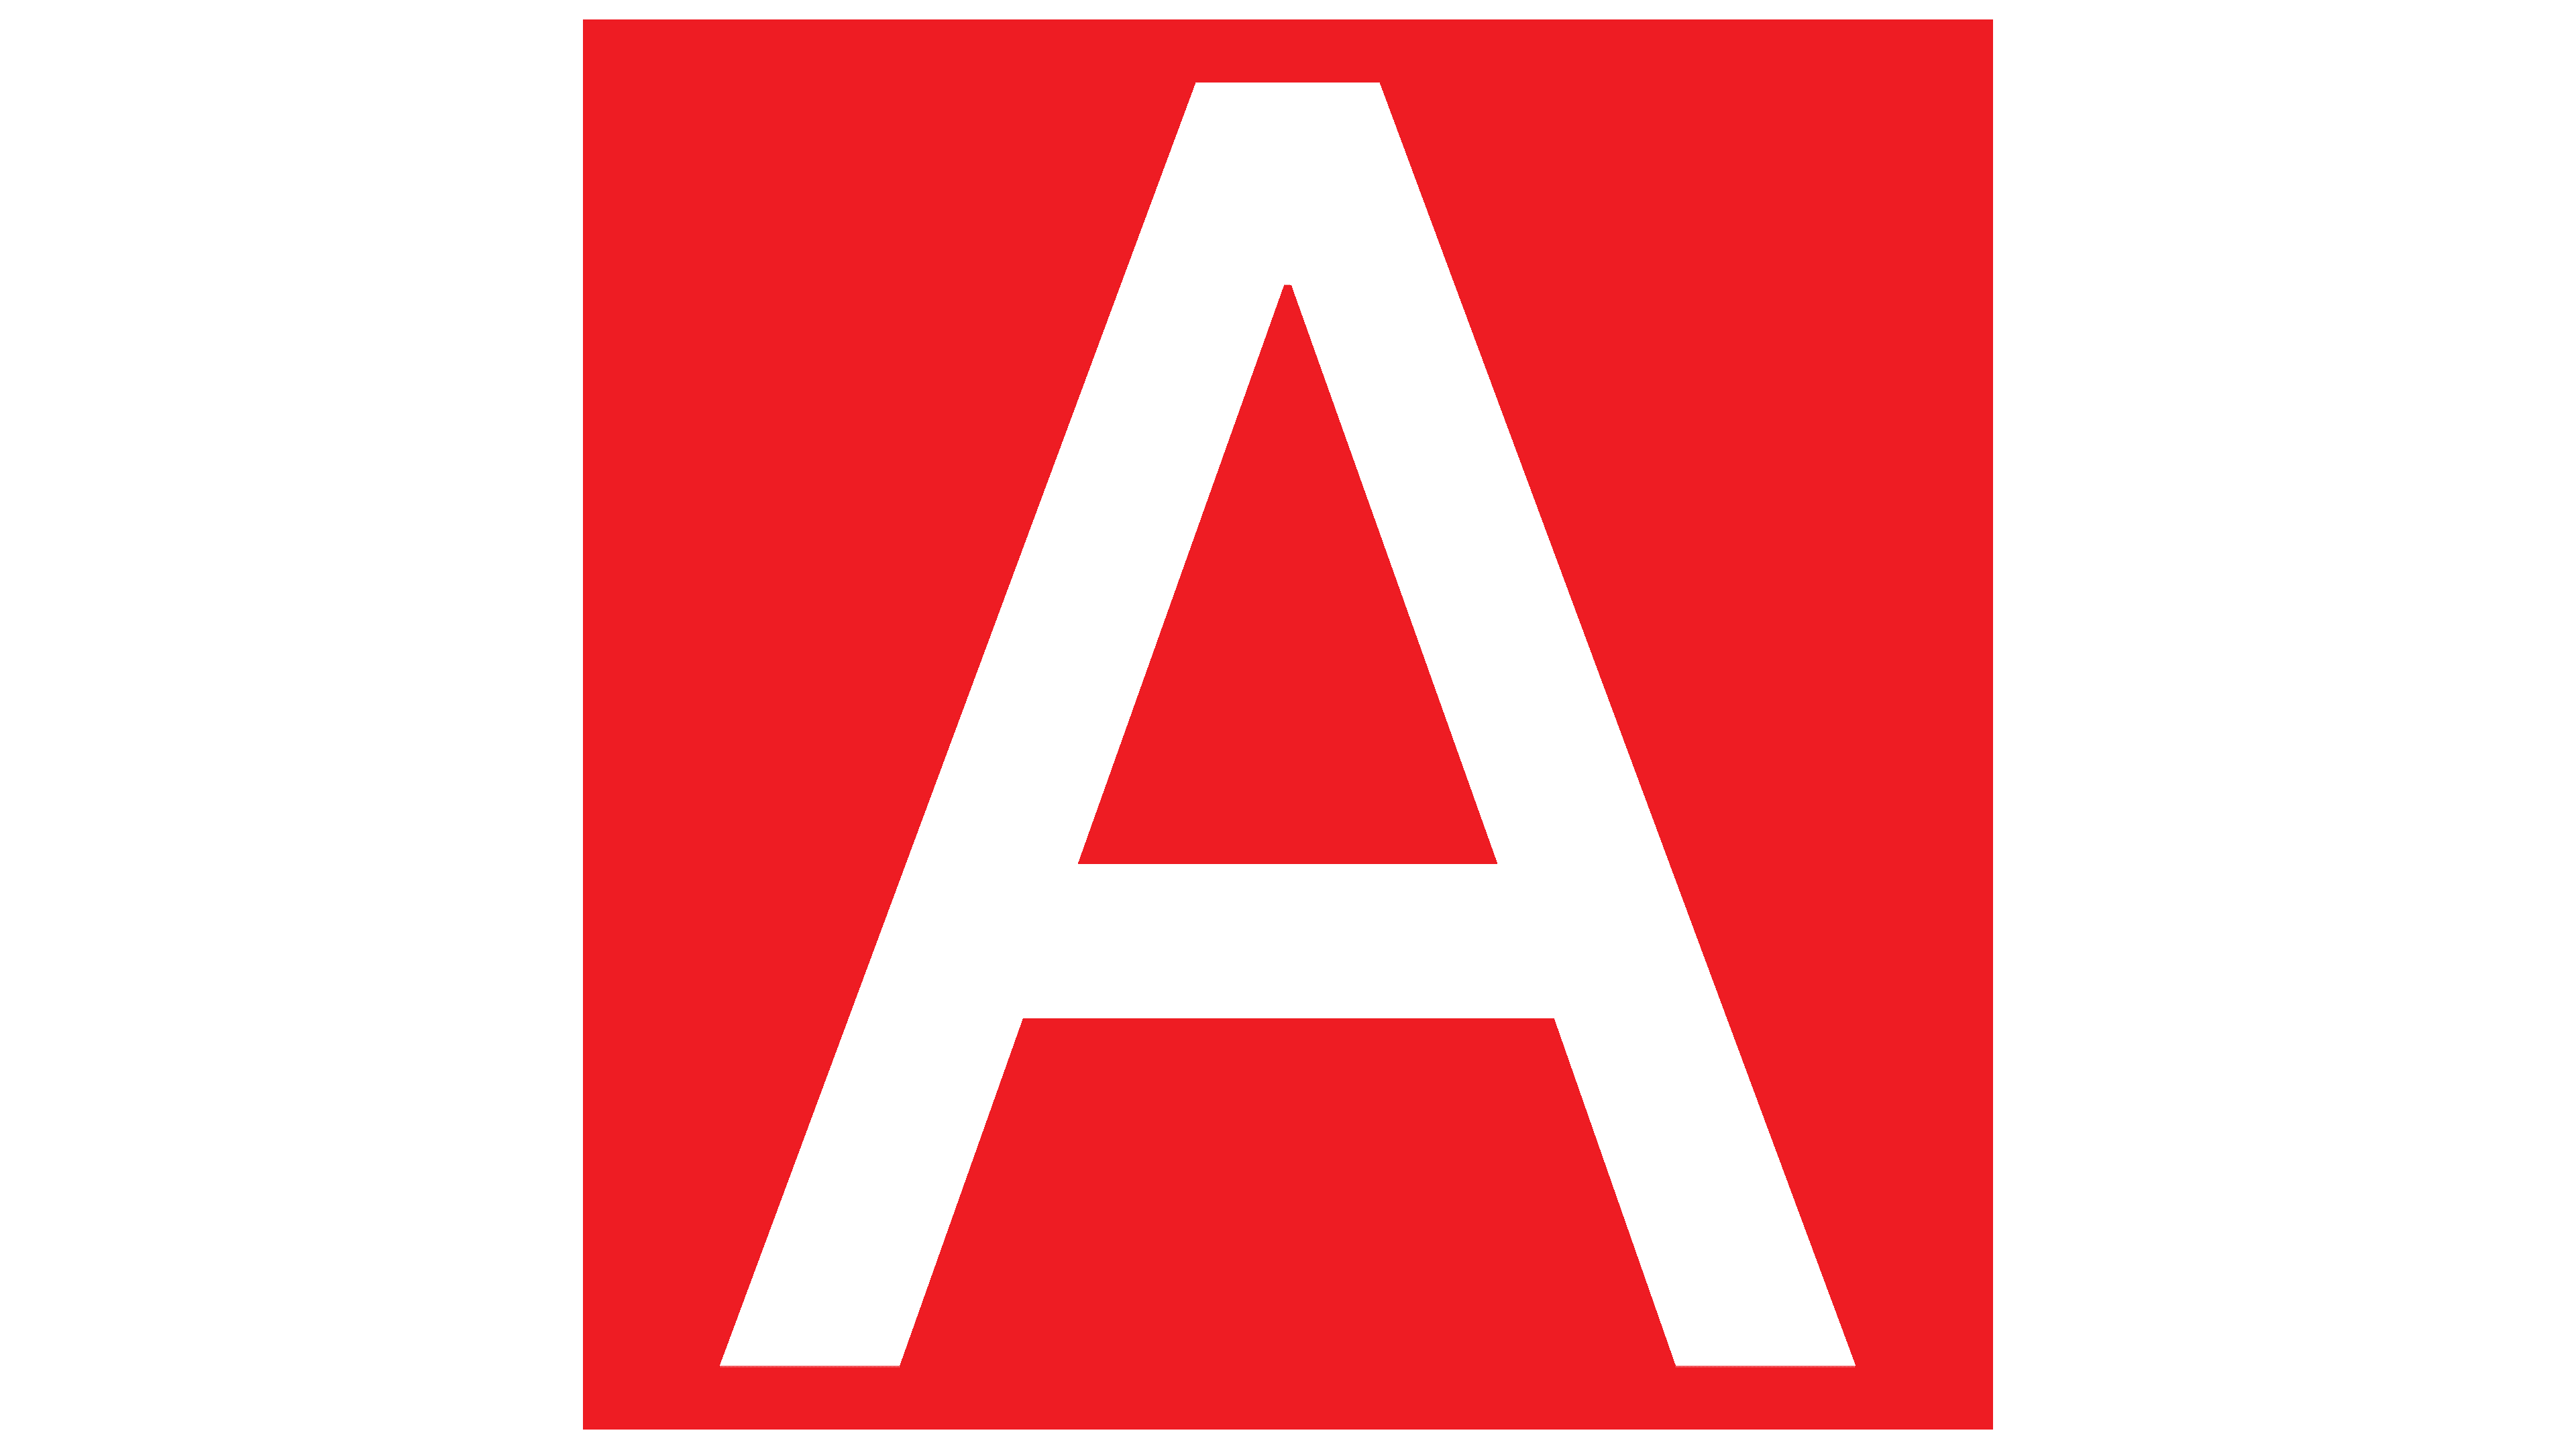 Alphabet, Inc.